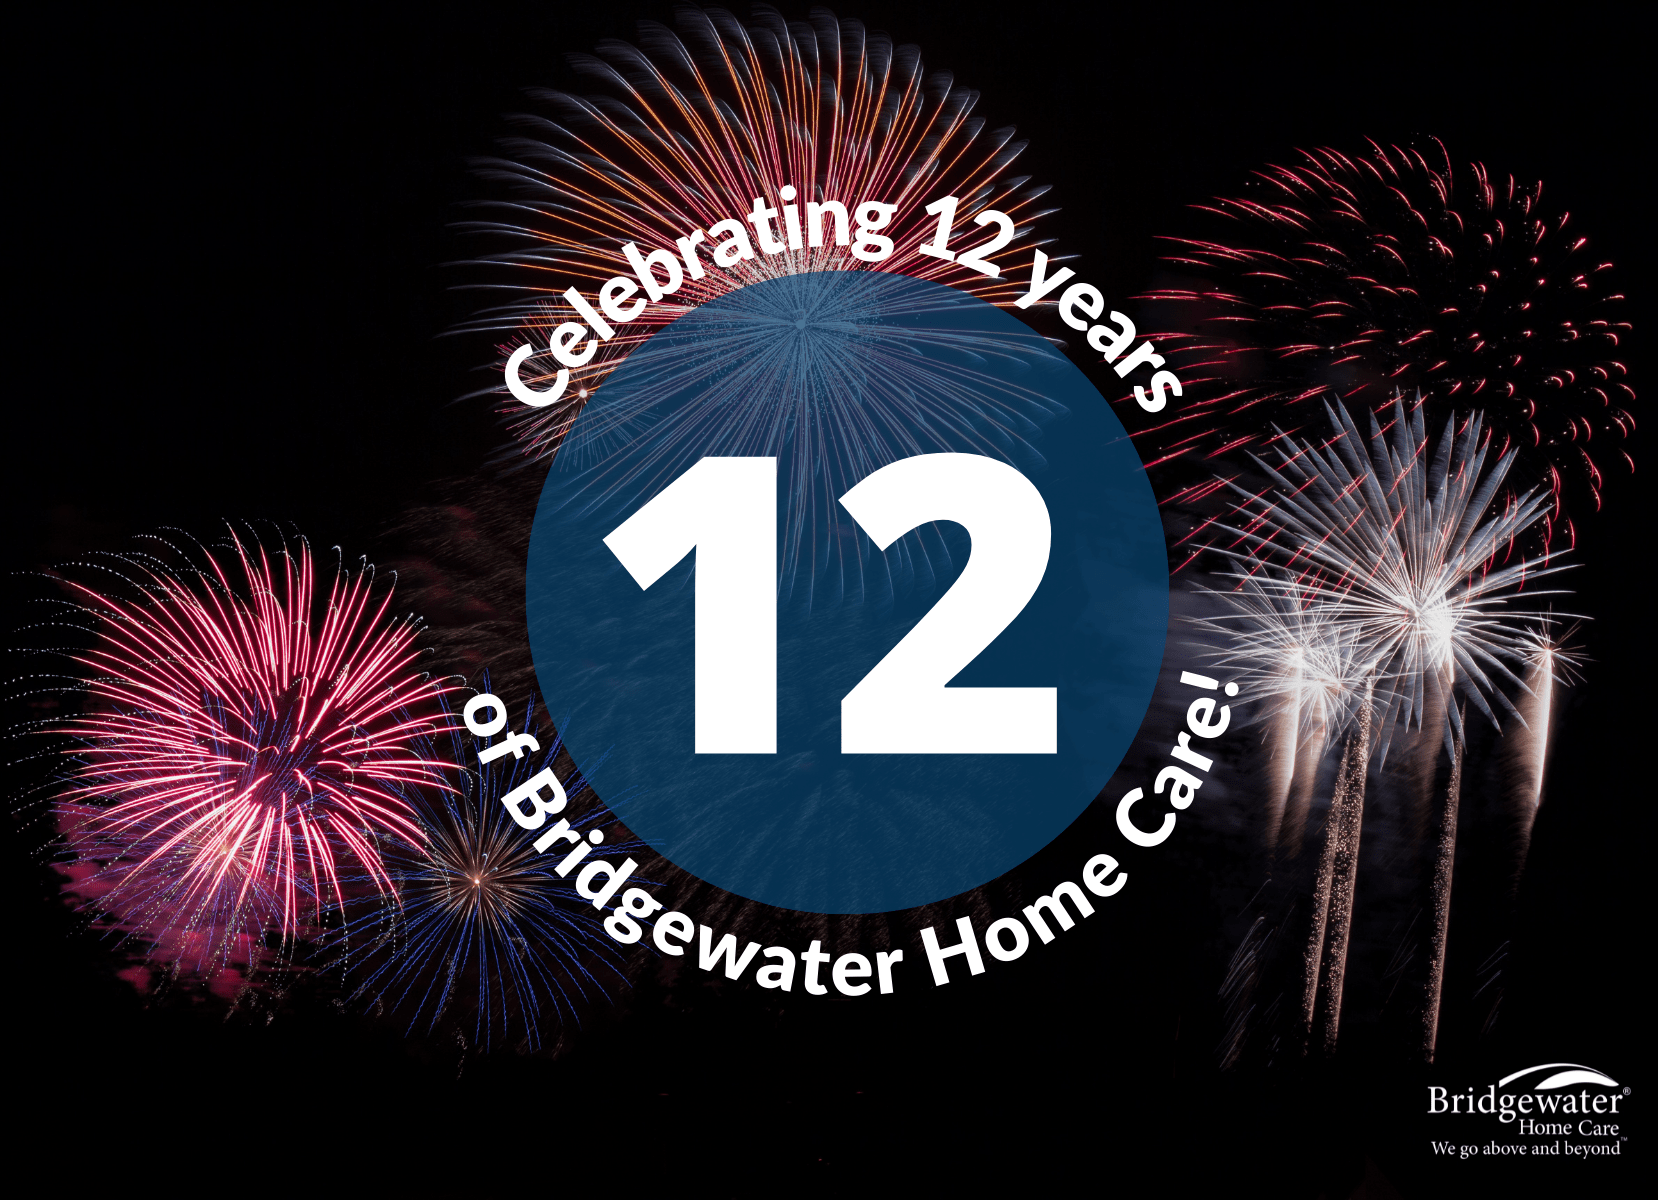 Bridgewater Home Care Celebrates 12th anniversary